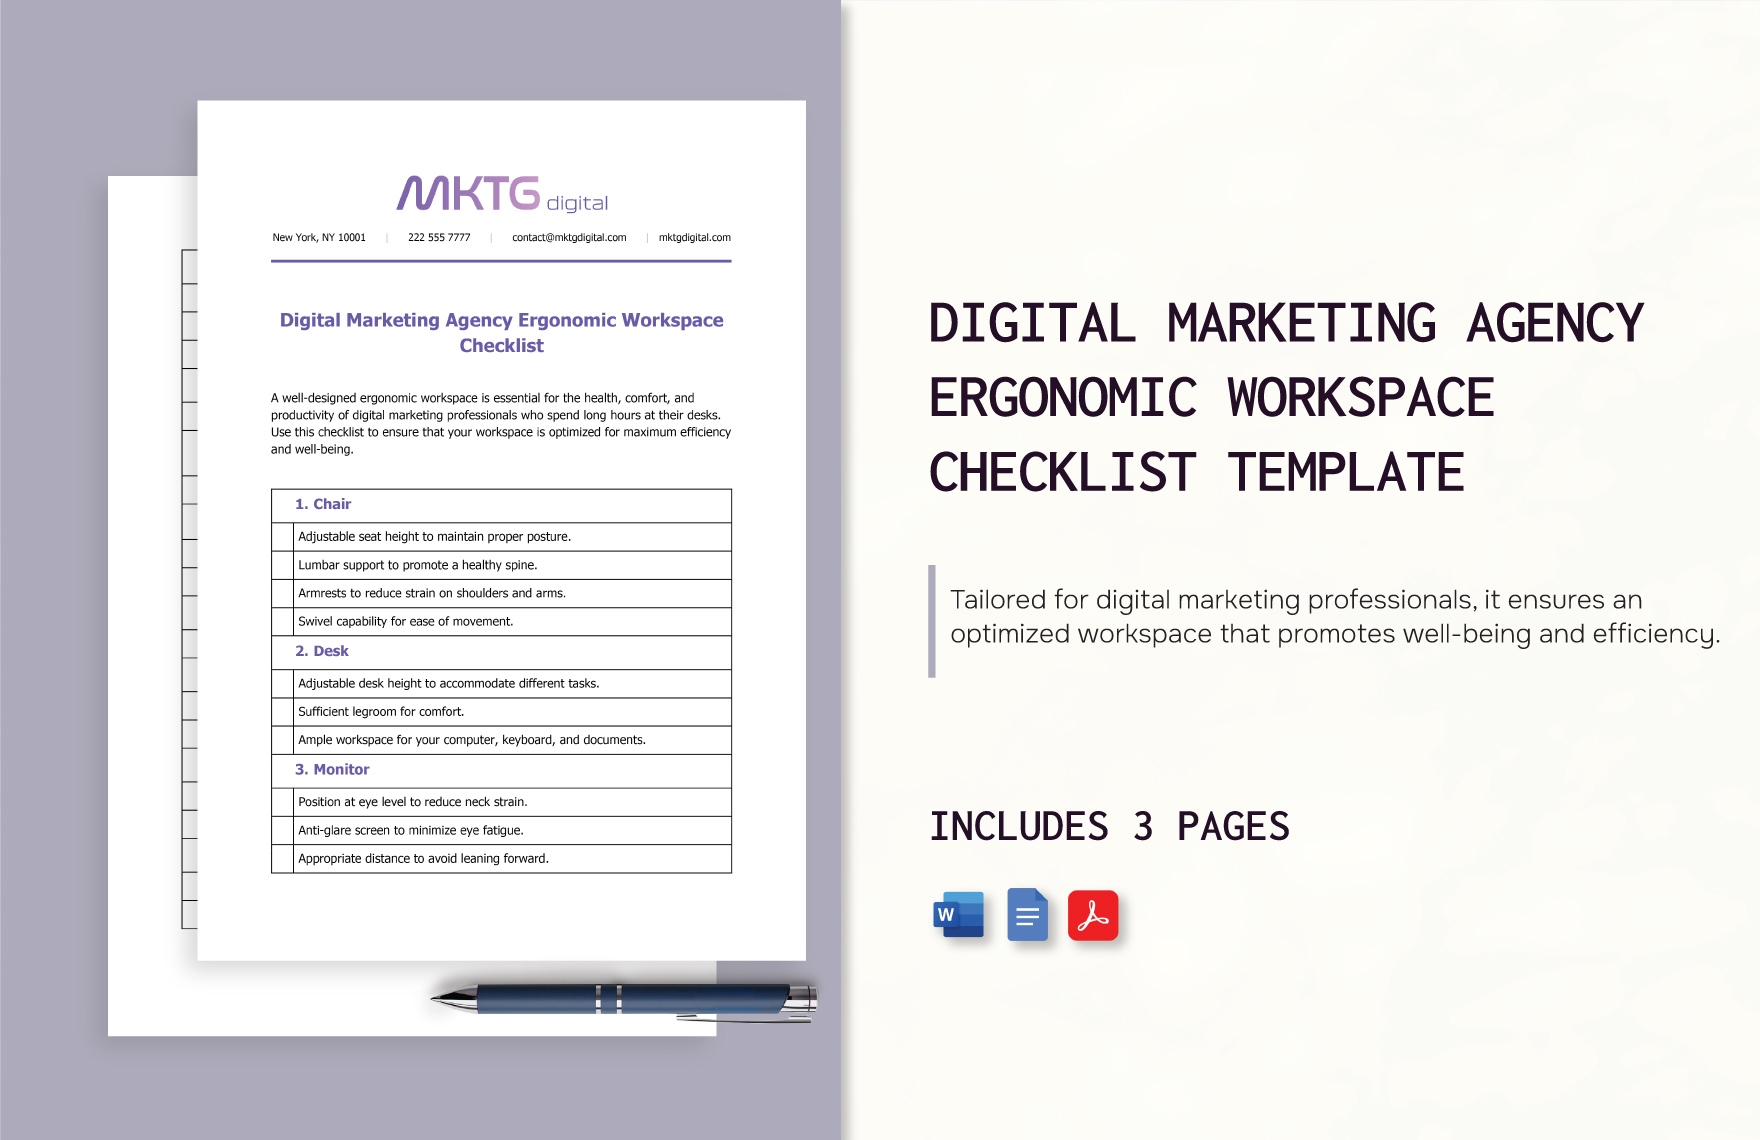 Digital Marketing Agency Ergonomic Workspace Checklist Template in Word, Google Docs, PDF